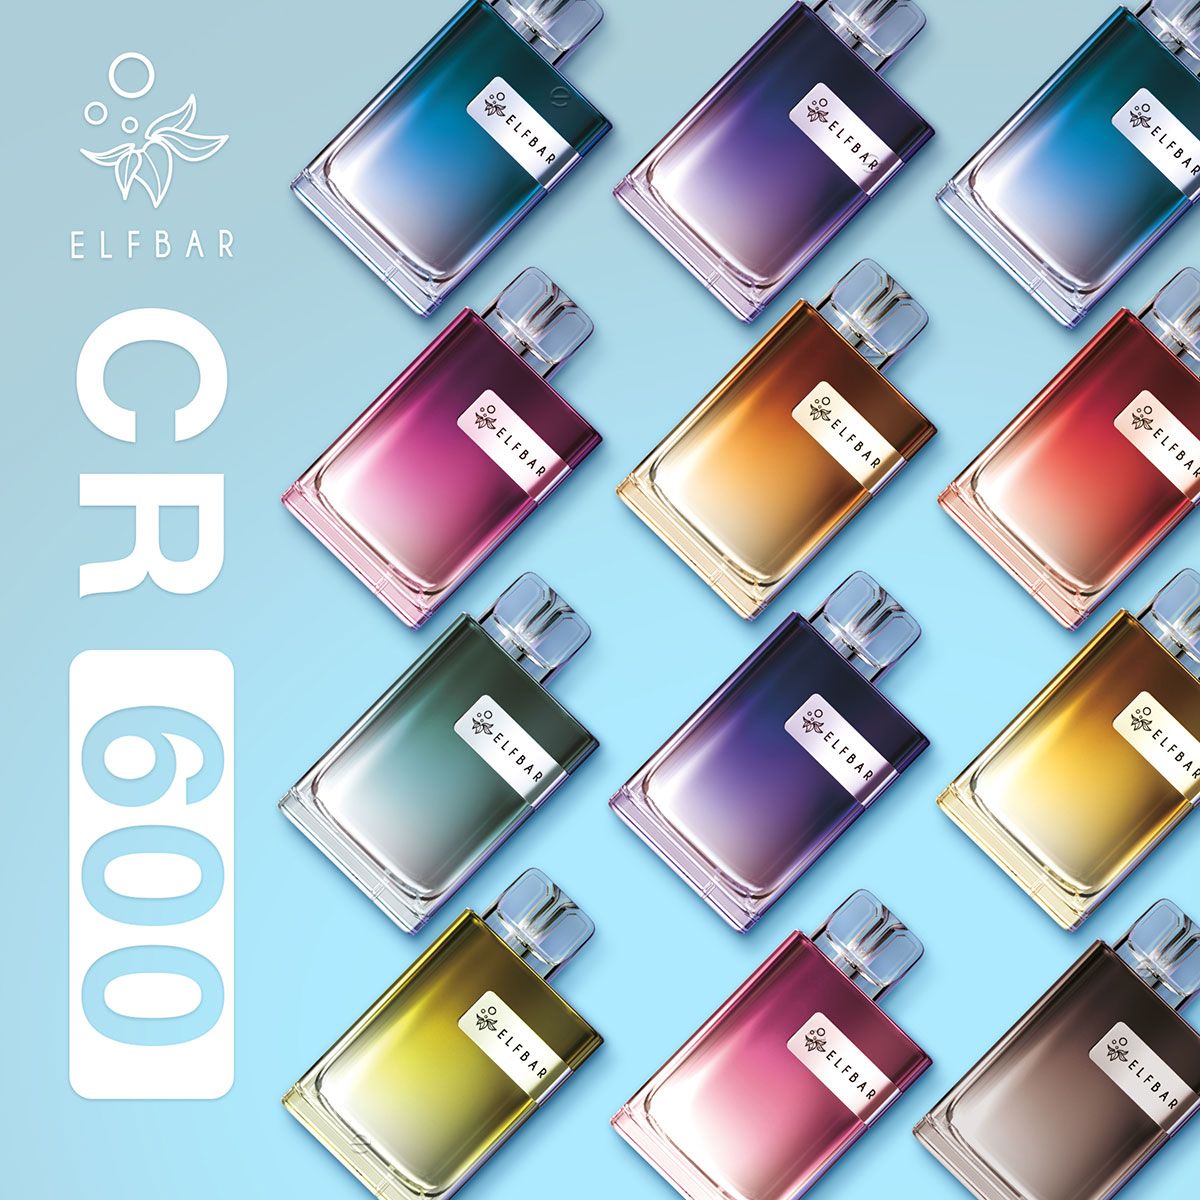 ELFBAR Crystal CR600 Blueberry Einweg E Zigarette 20mg/ml